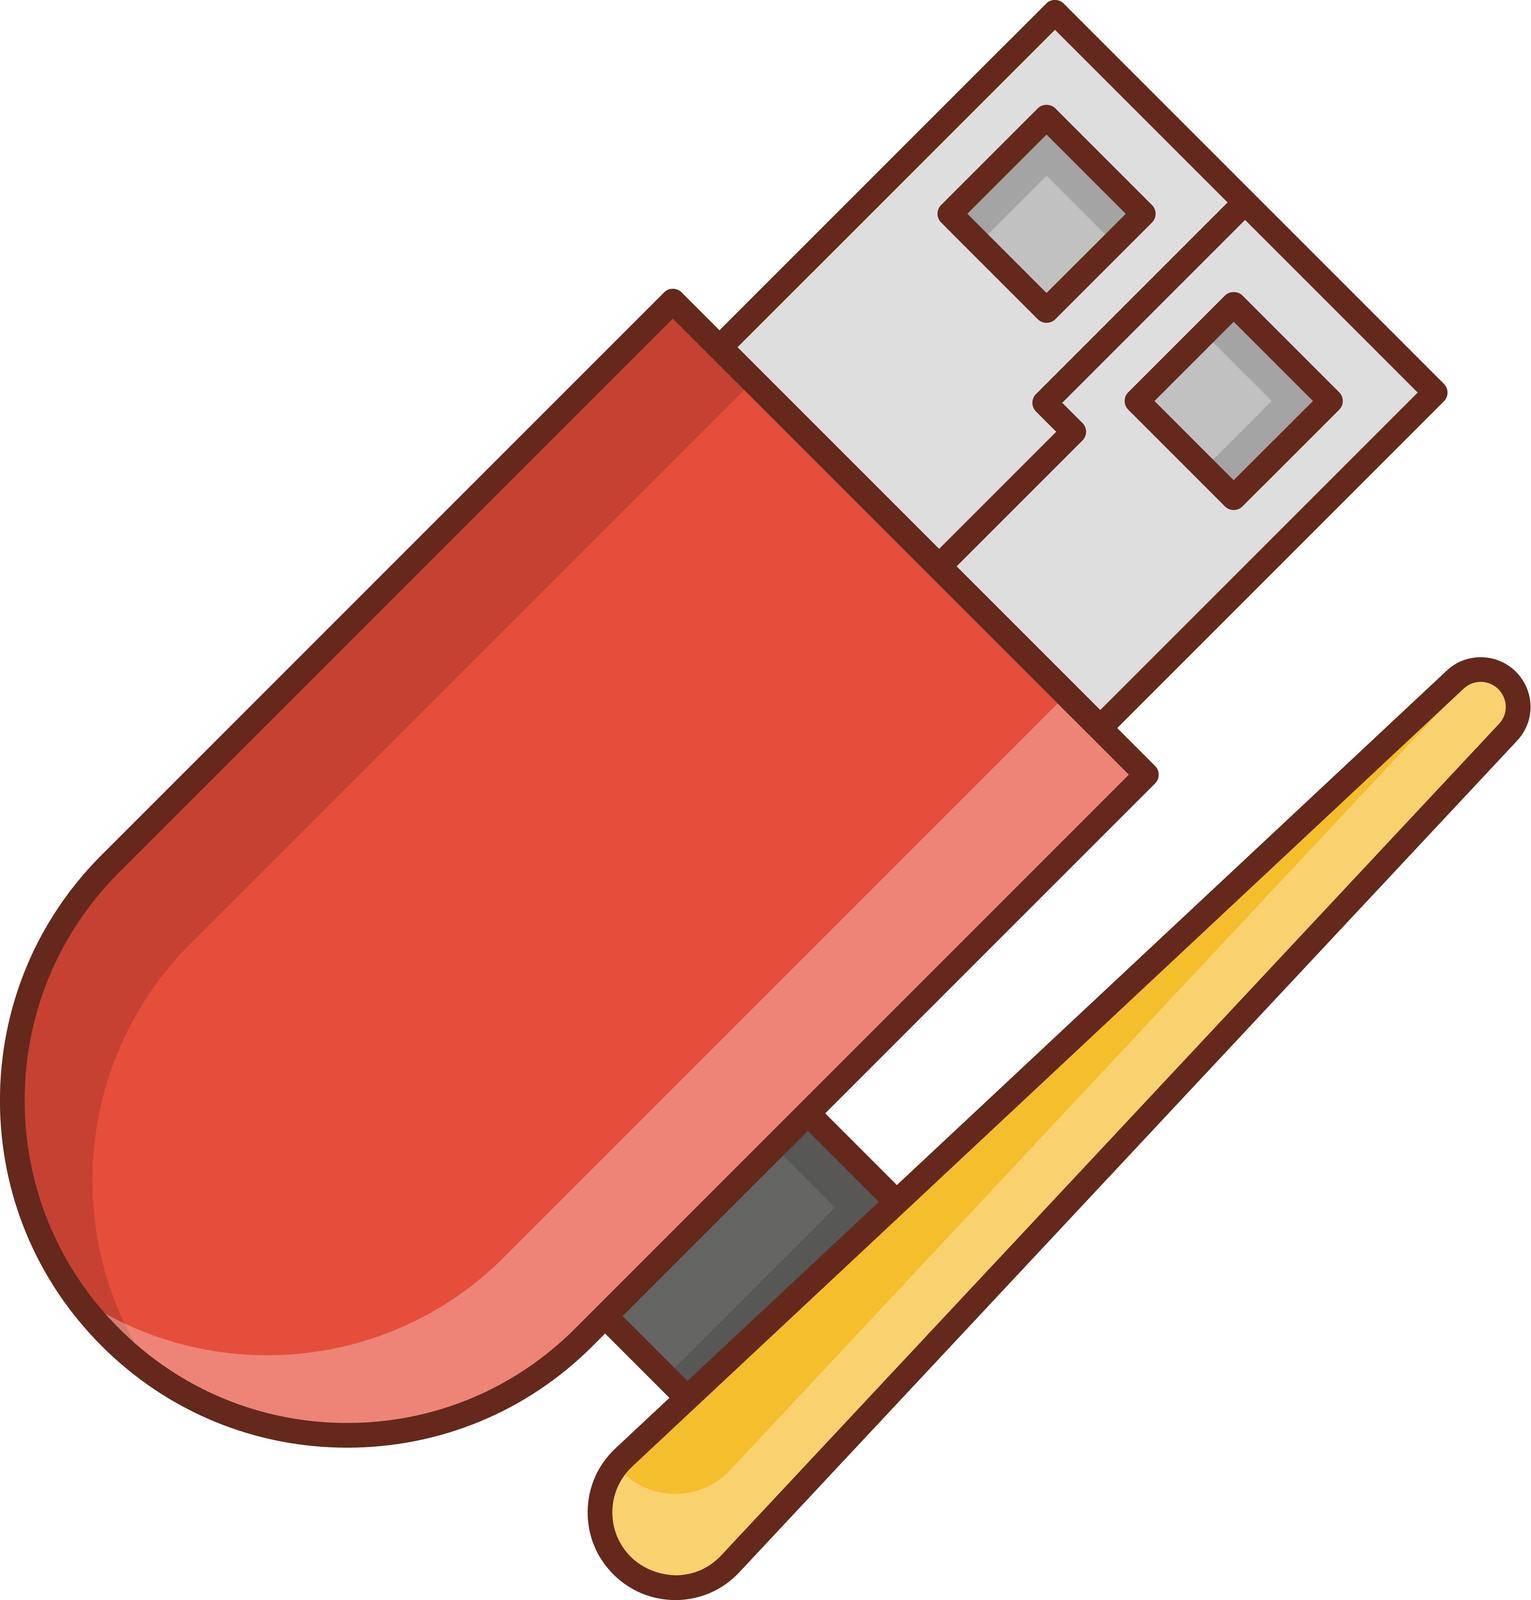 USB by FlaticonsDesign